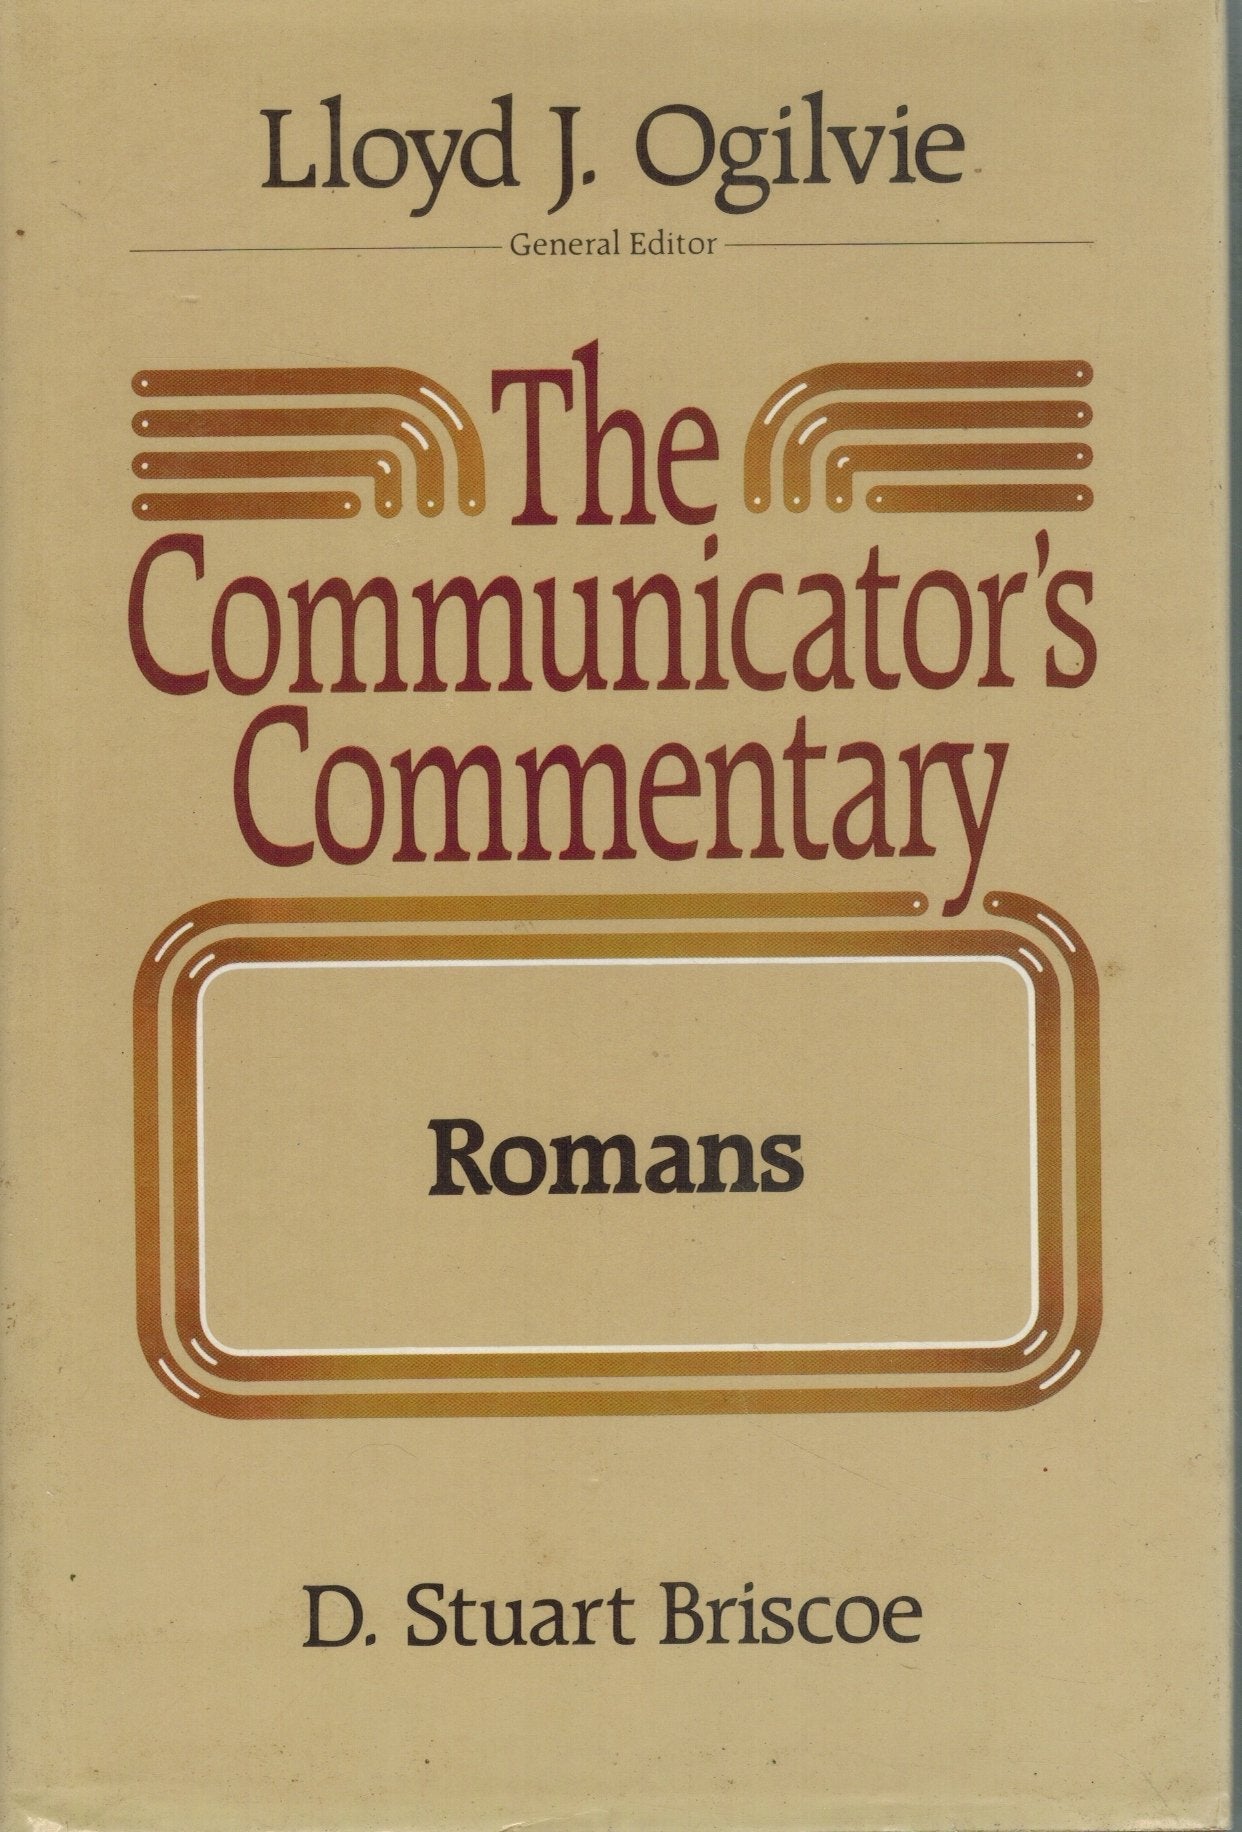 THE COMMUNICATOR'S COMMENTARY  Romans  by Briscoe, D. Stuart & Lloyd J. Ogilvie